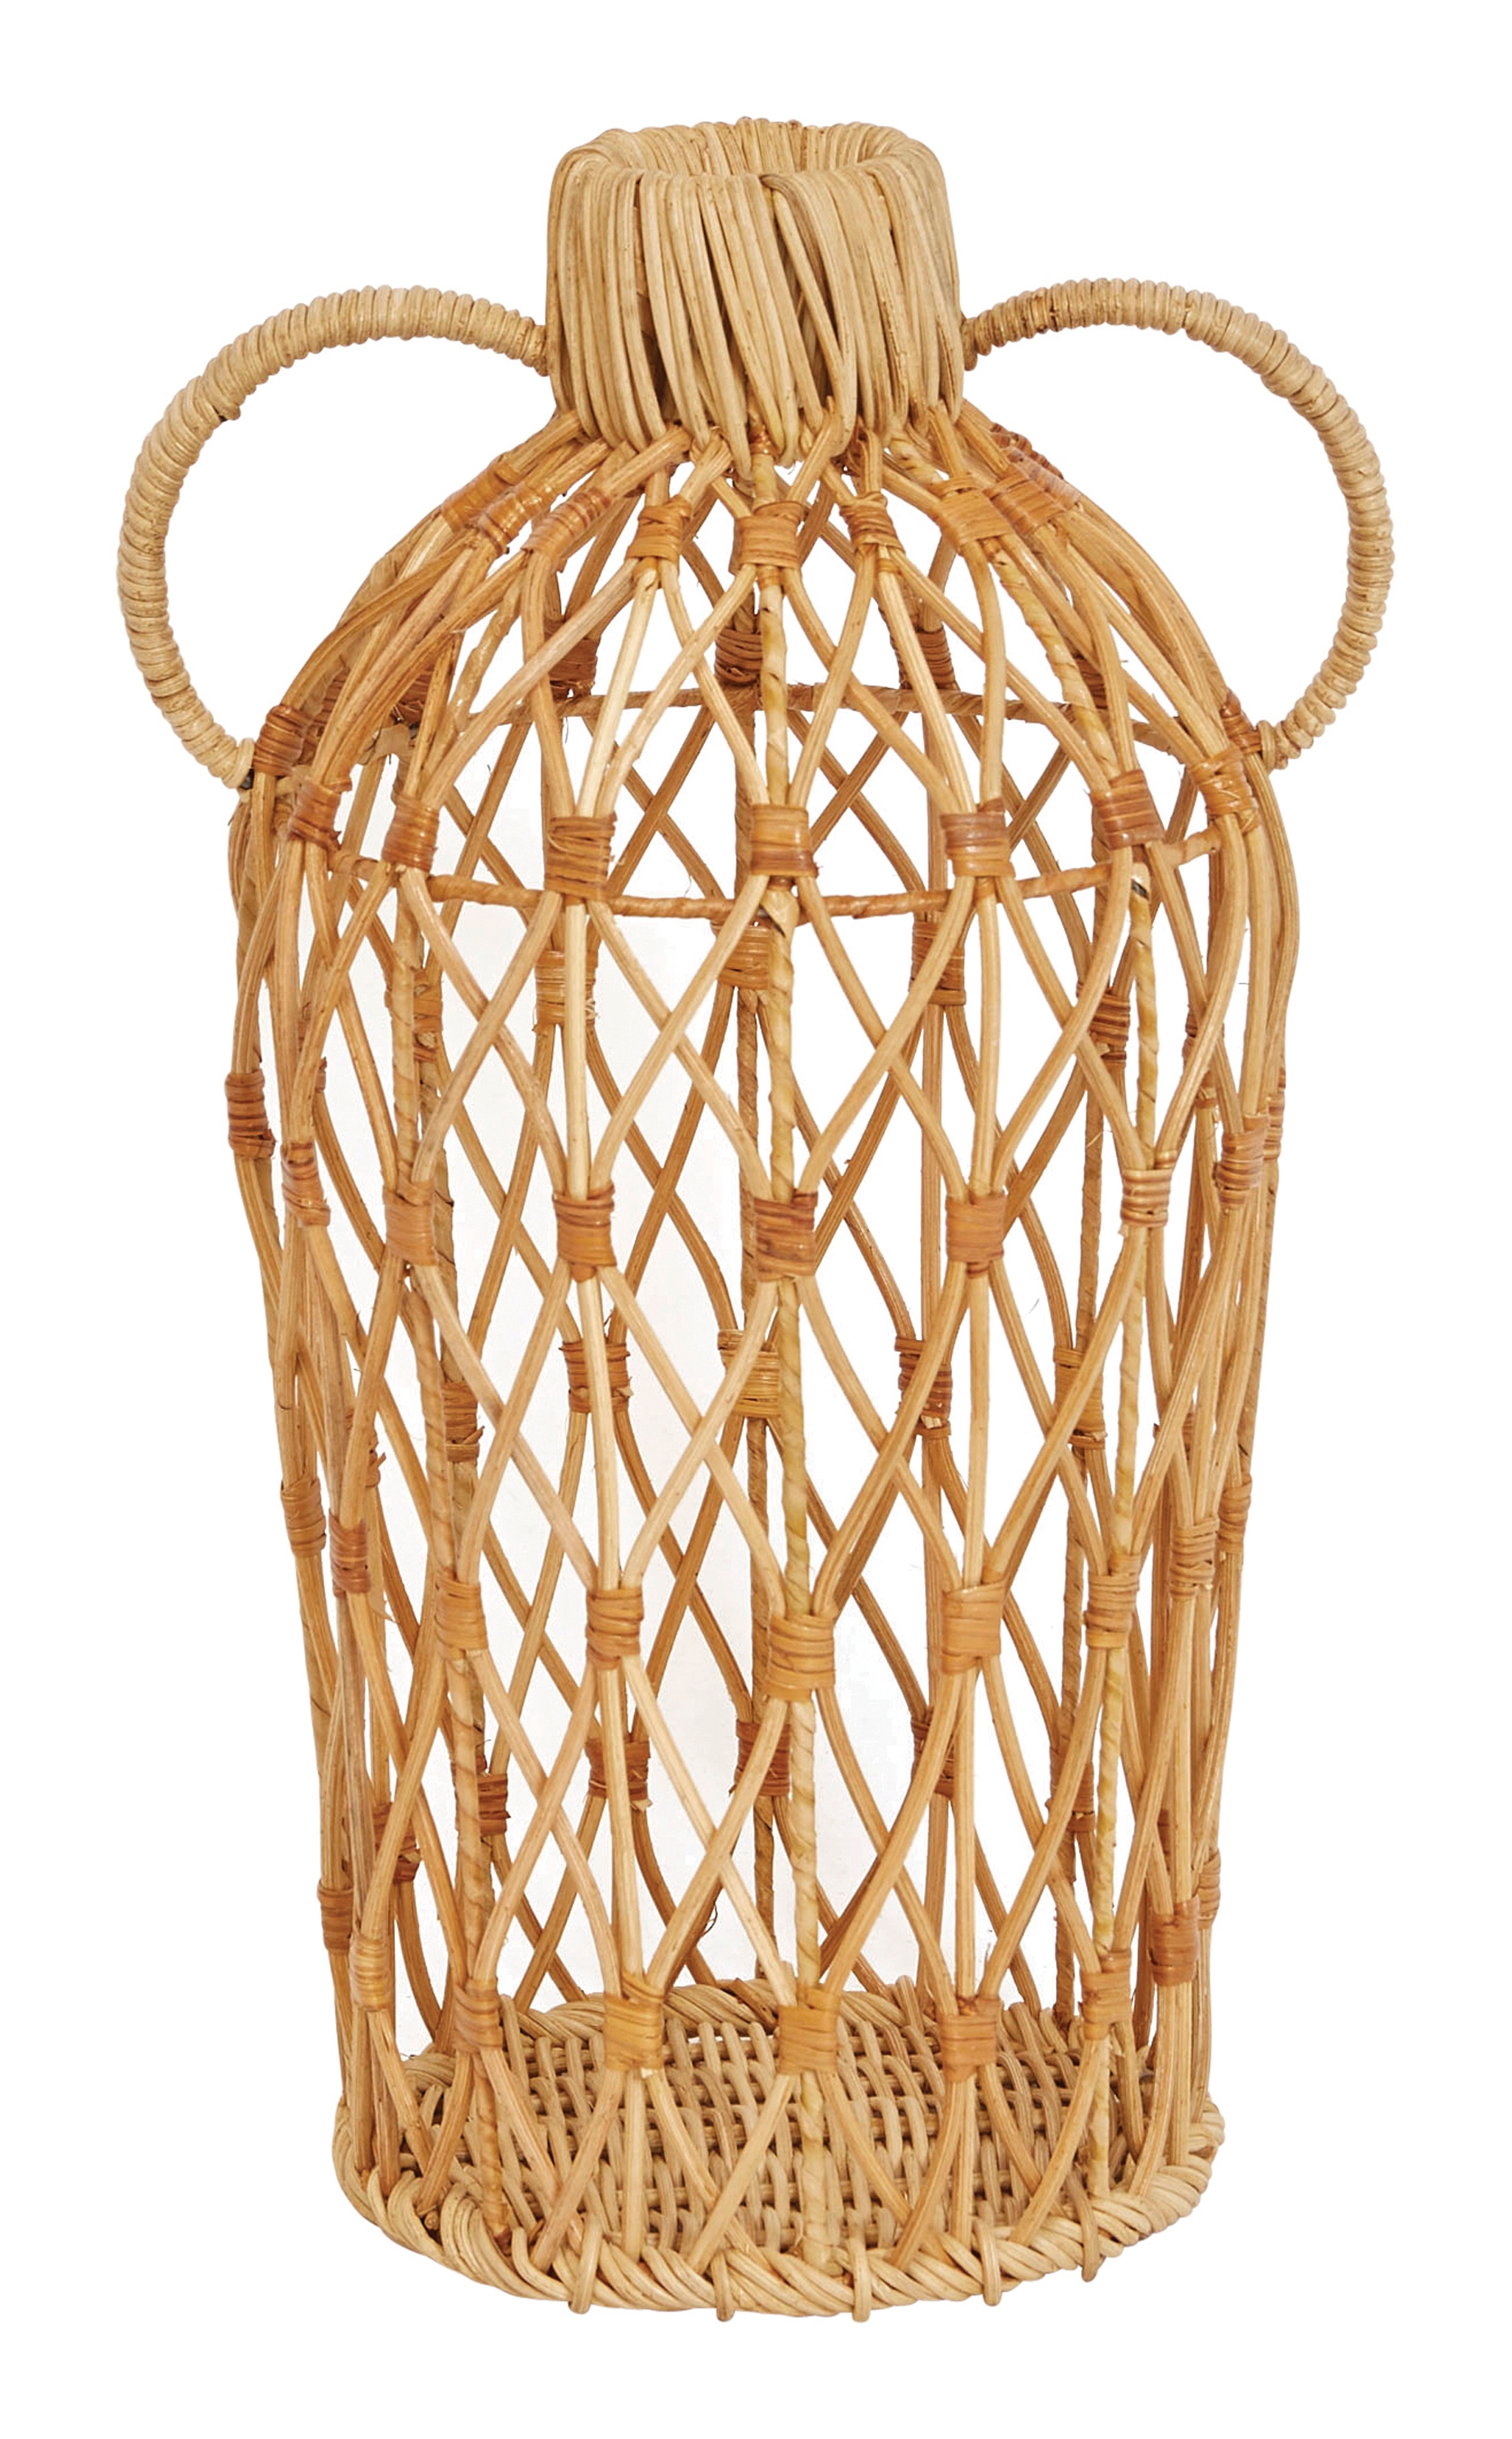 Decorative 17"H Handwoven Rattan Vase with Handles - Image 0